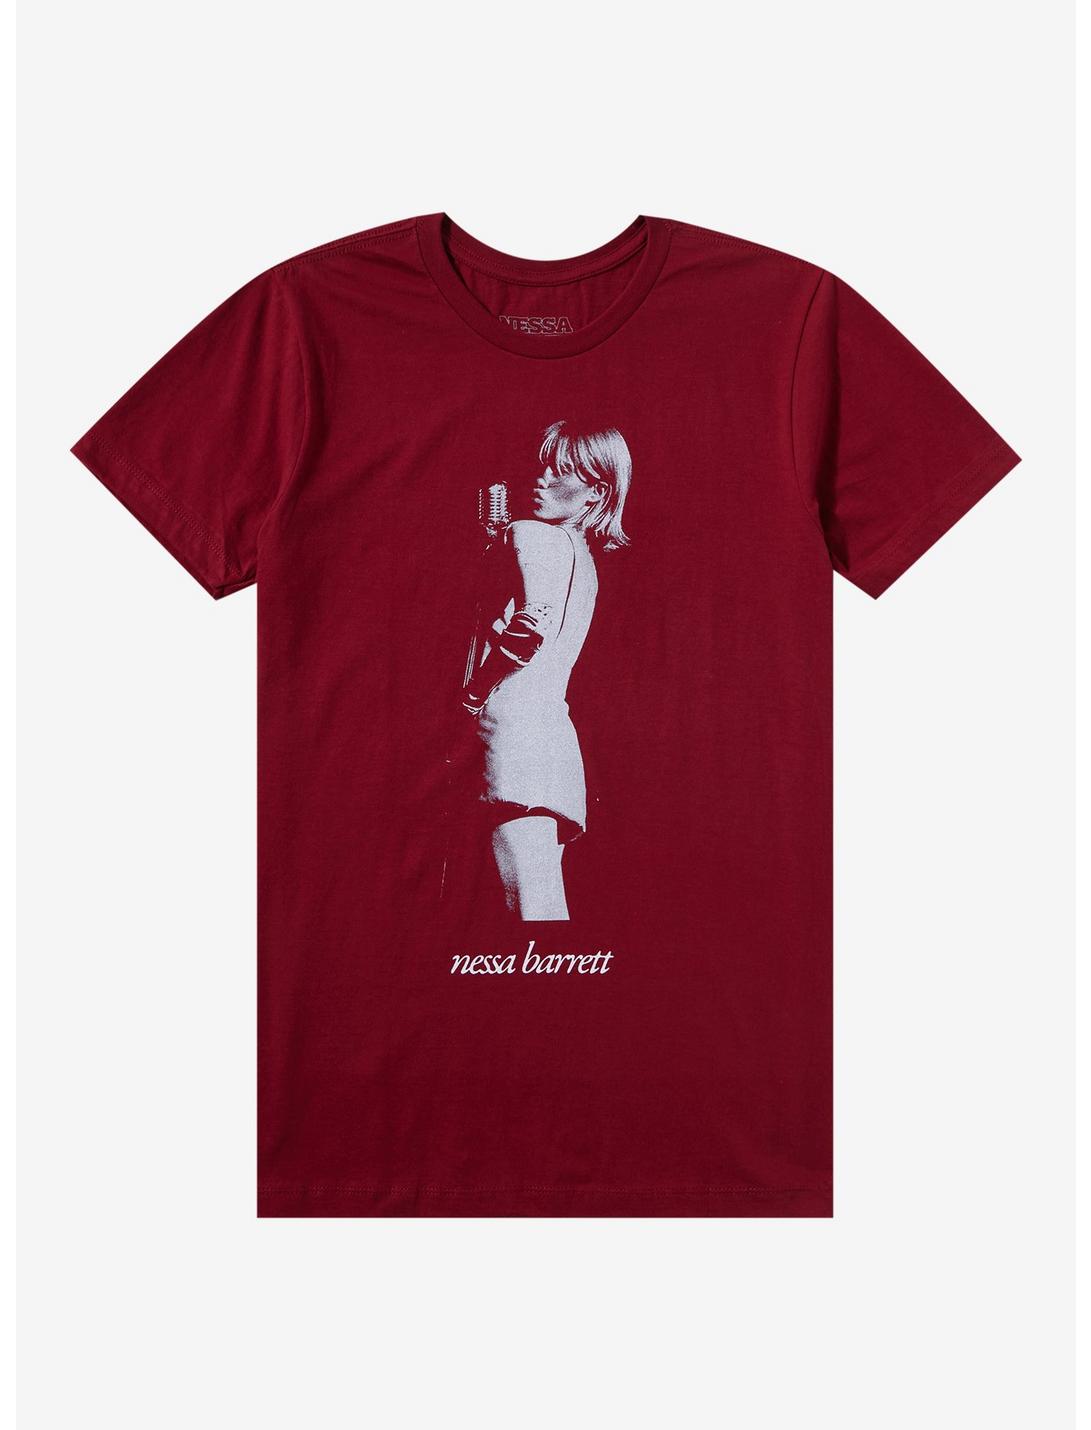 Nessa Barrett Standing Portrait Boyfriend Fit Girls T-Shirt, BURGUNDY, hi-res